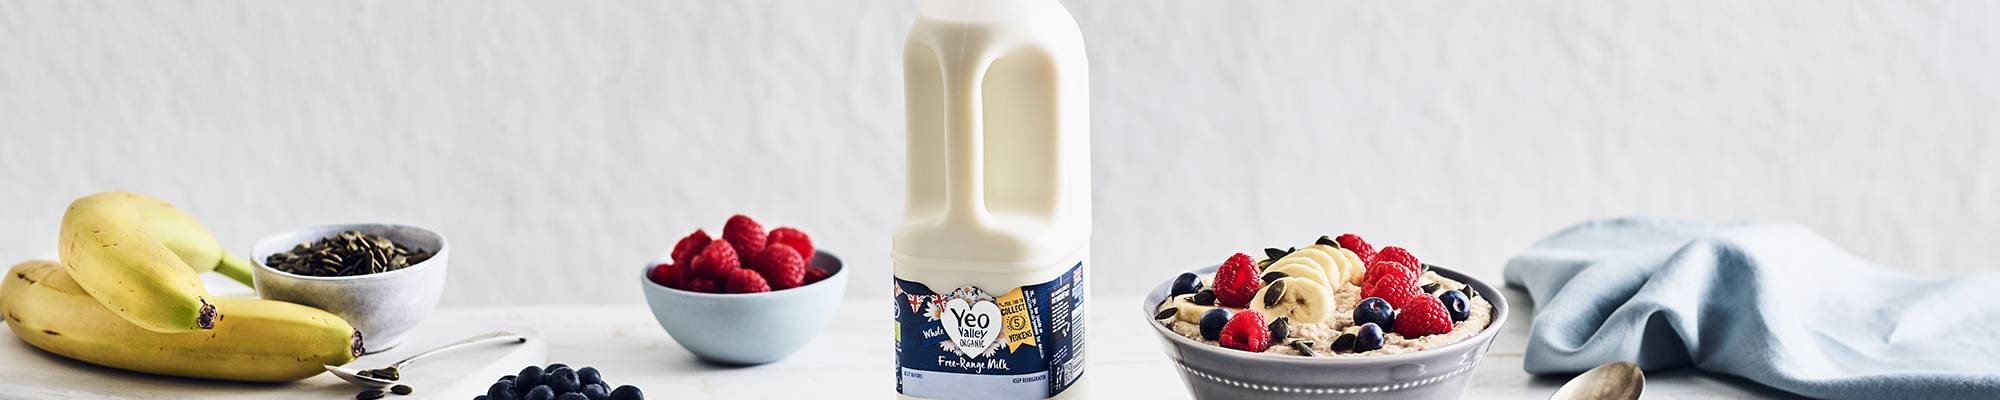 Yeo Valley Organic Whole Milk